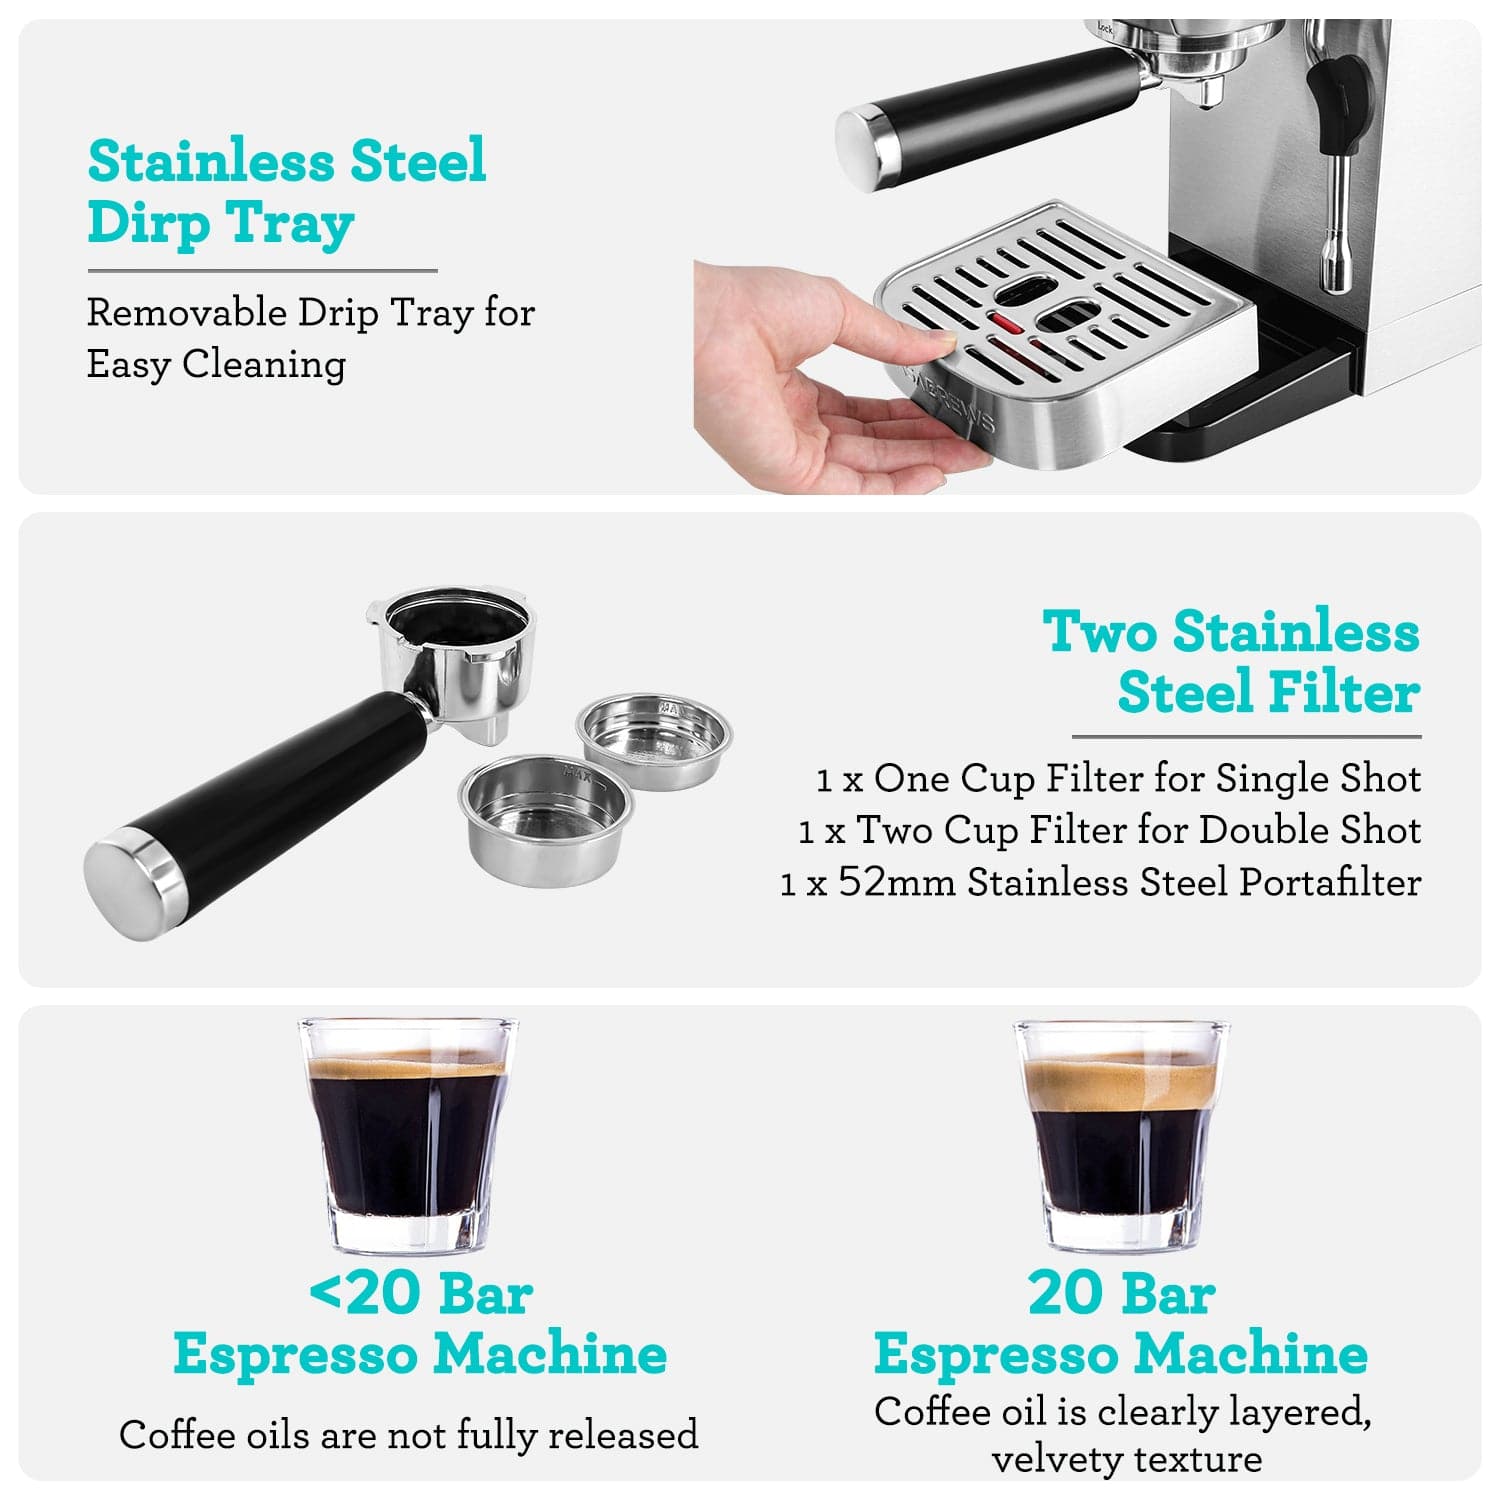 CASABREWS 3700Gense™ 20-Bar Espresso Coffee Machine with Powerful Steam Wand